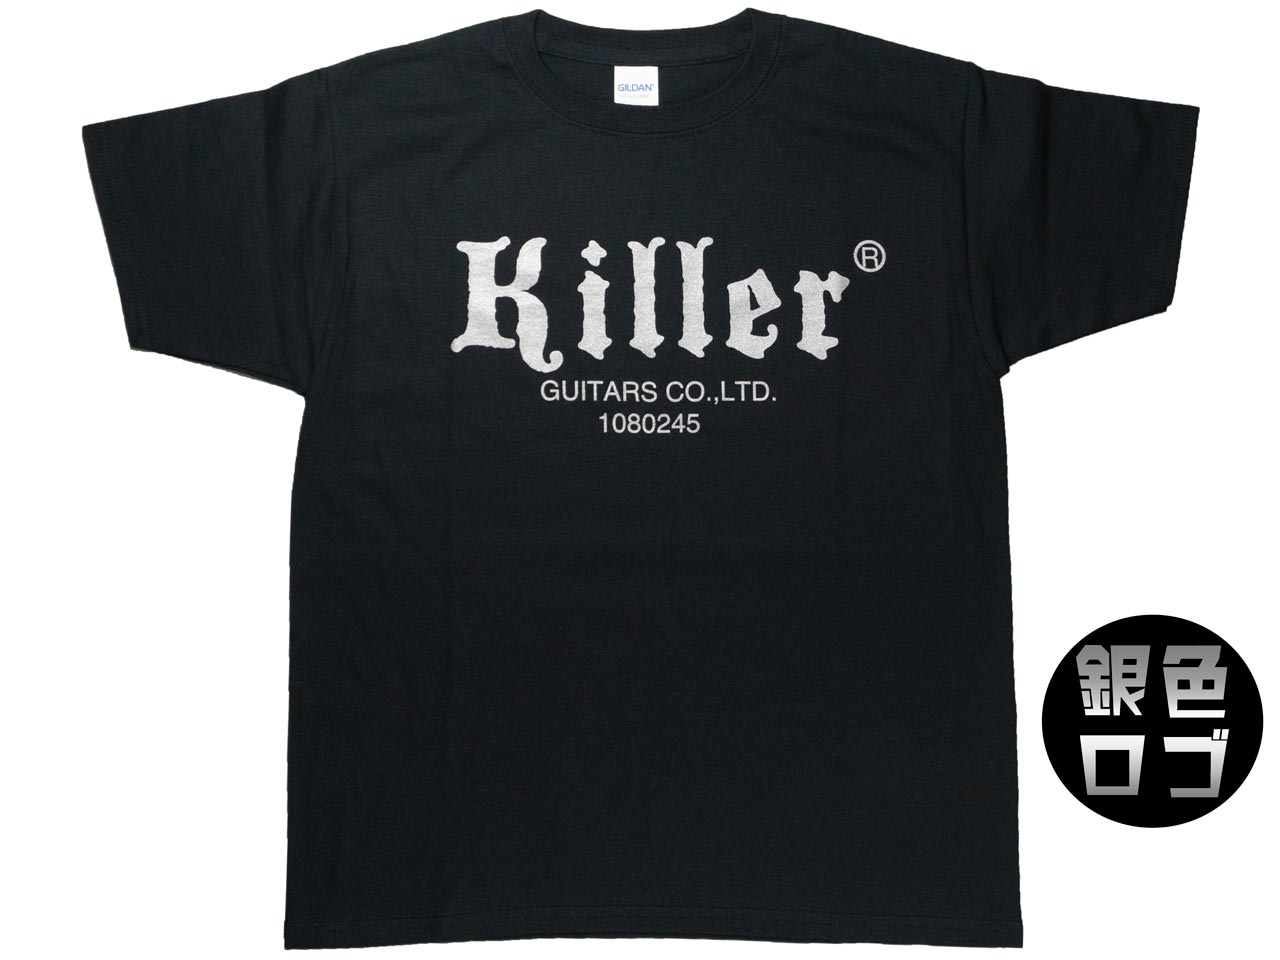 Killer(キラー) ロゴ入りTシャツ (Black / Silver Logo)